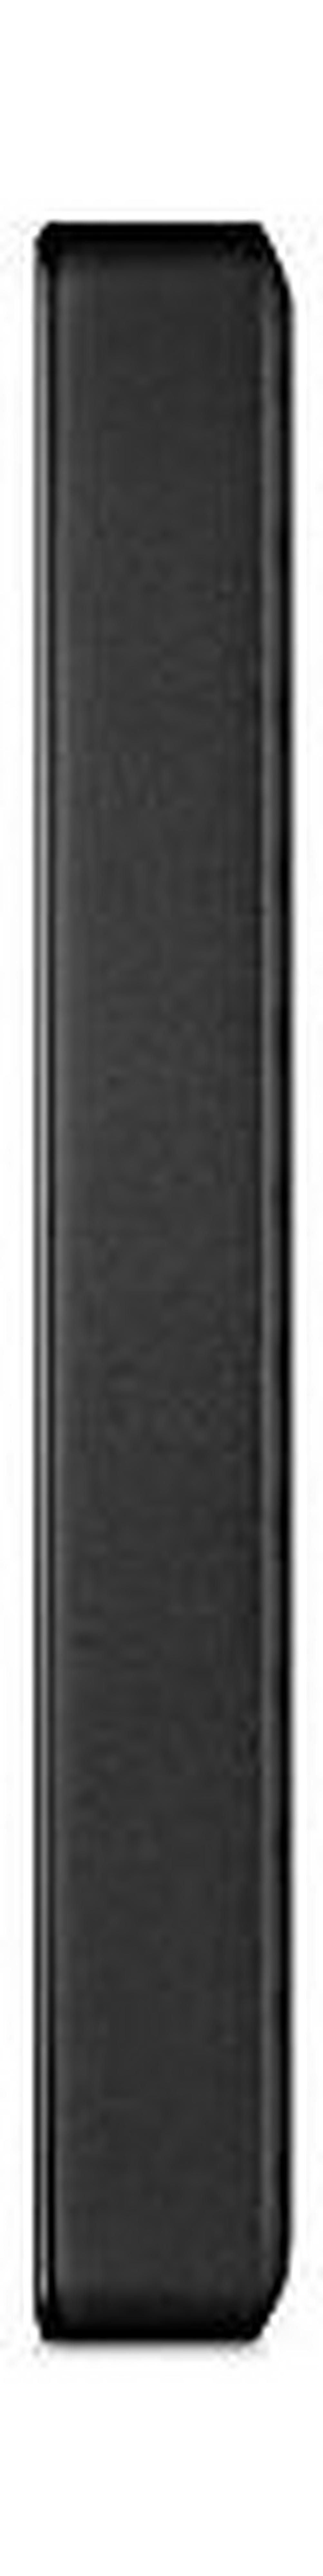 Seagate STEA2000400 Expansion 2TB External USB 3.0 Portable Hard Drive - Black